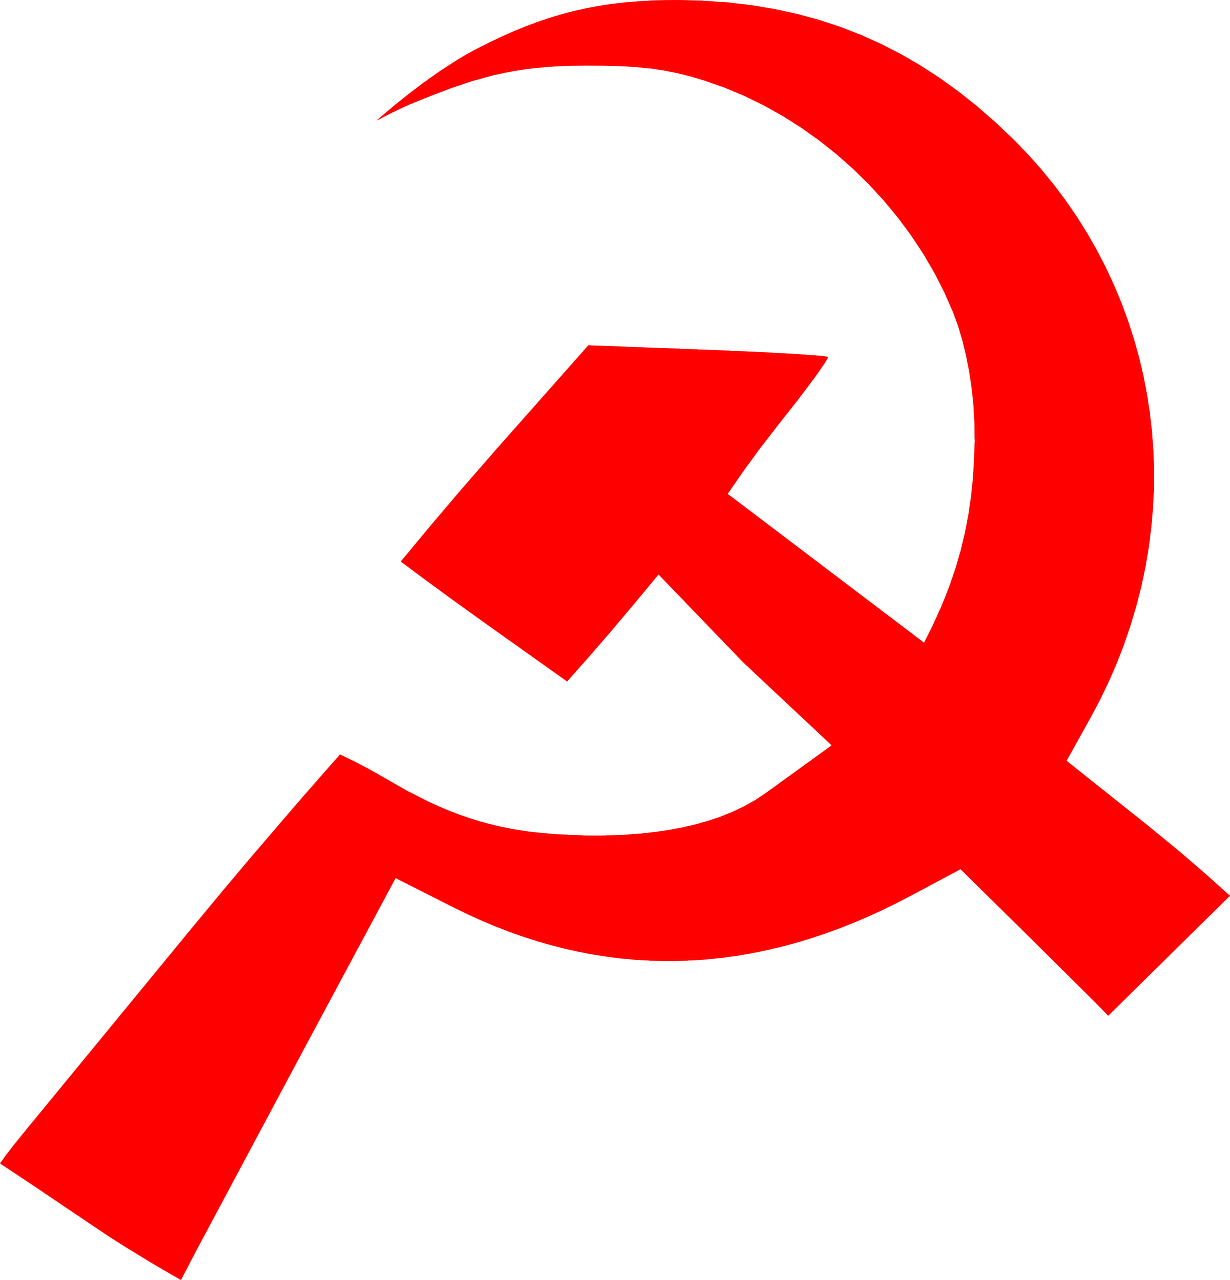 Socialism communism hammer and sickle